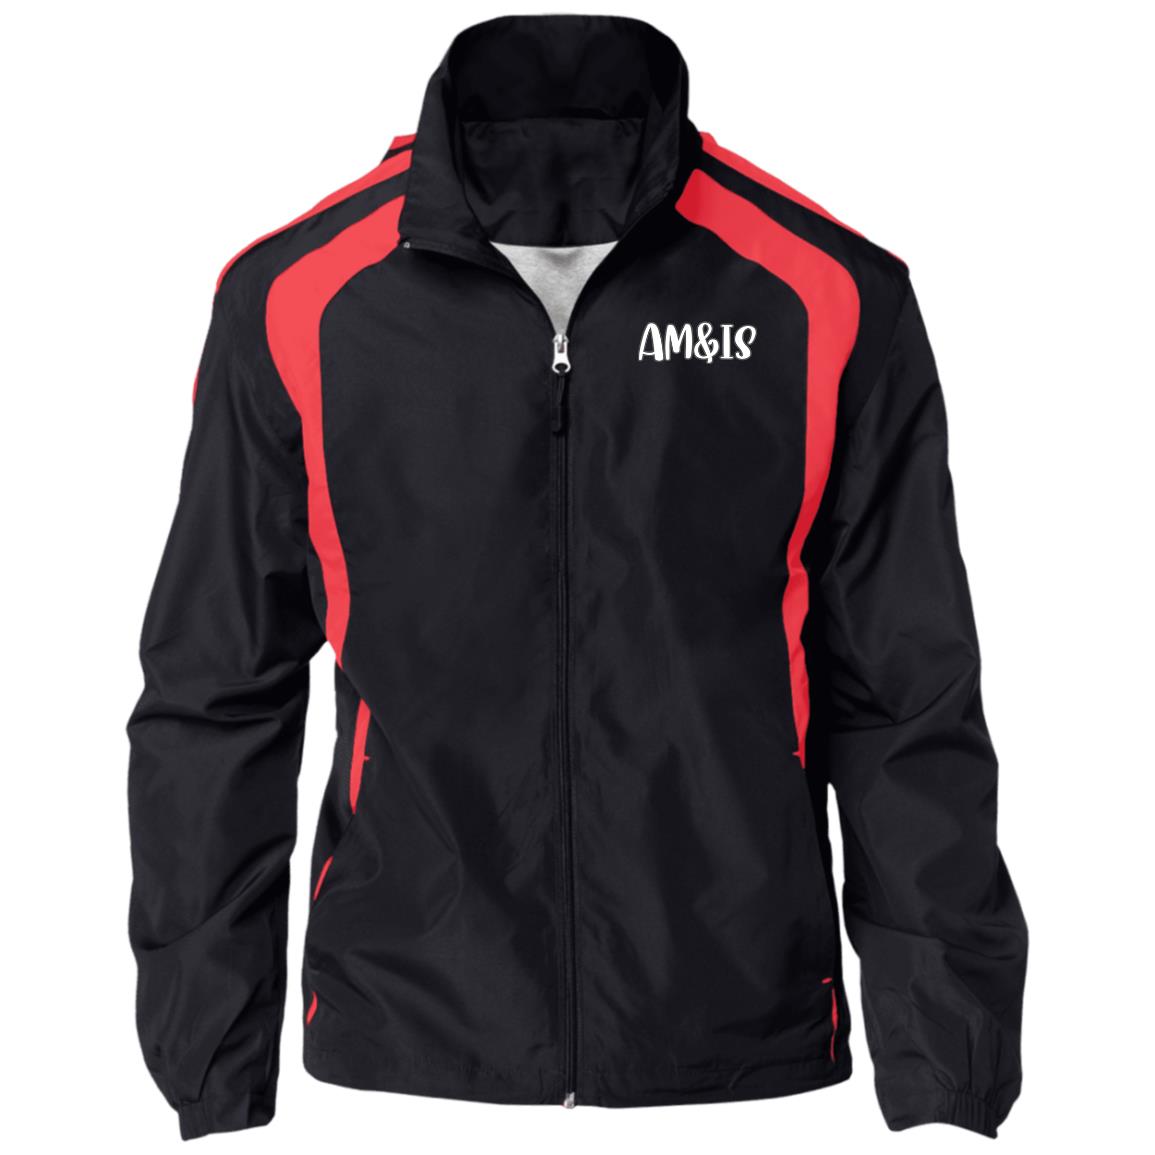 BLACK TRUE RED - AM&IS Activewear Jersey-Lined Raglan Jacket - mens jacket at TFC&H Co.